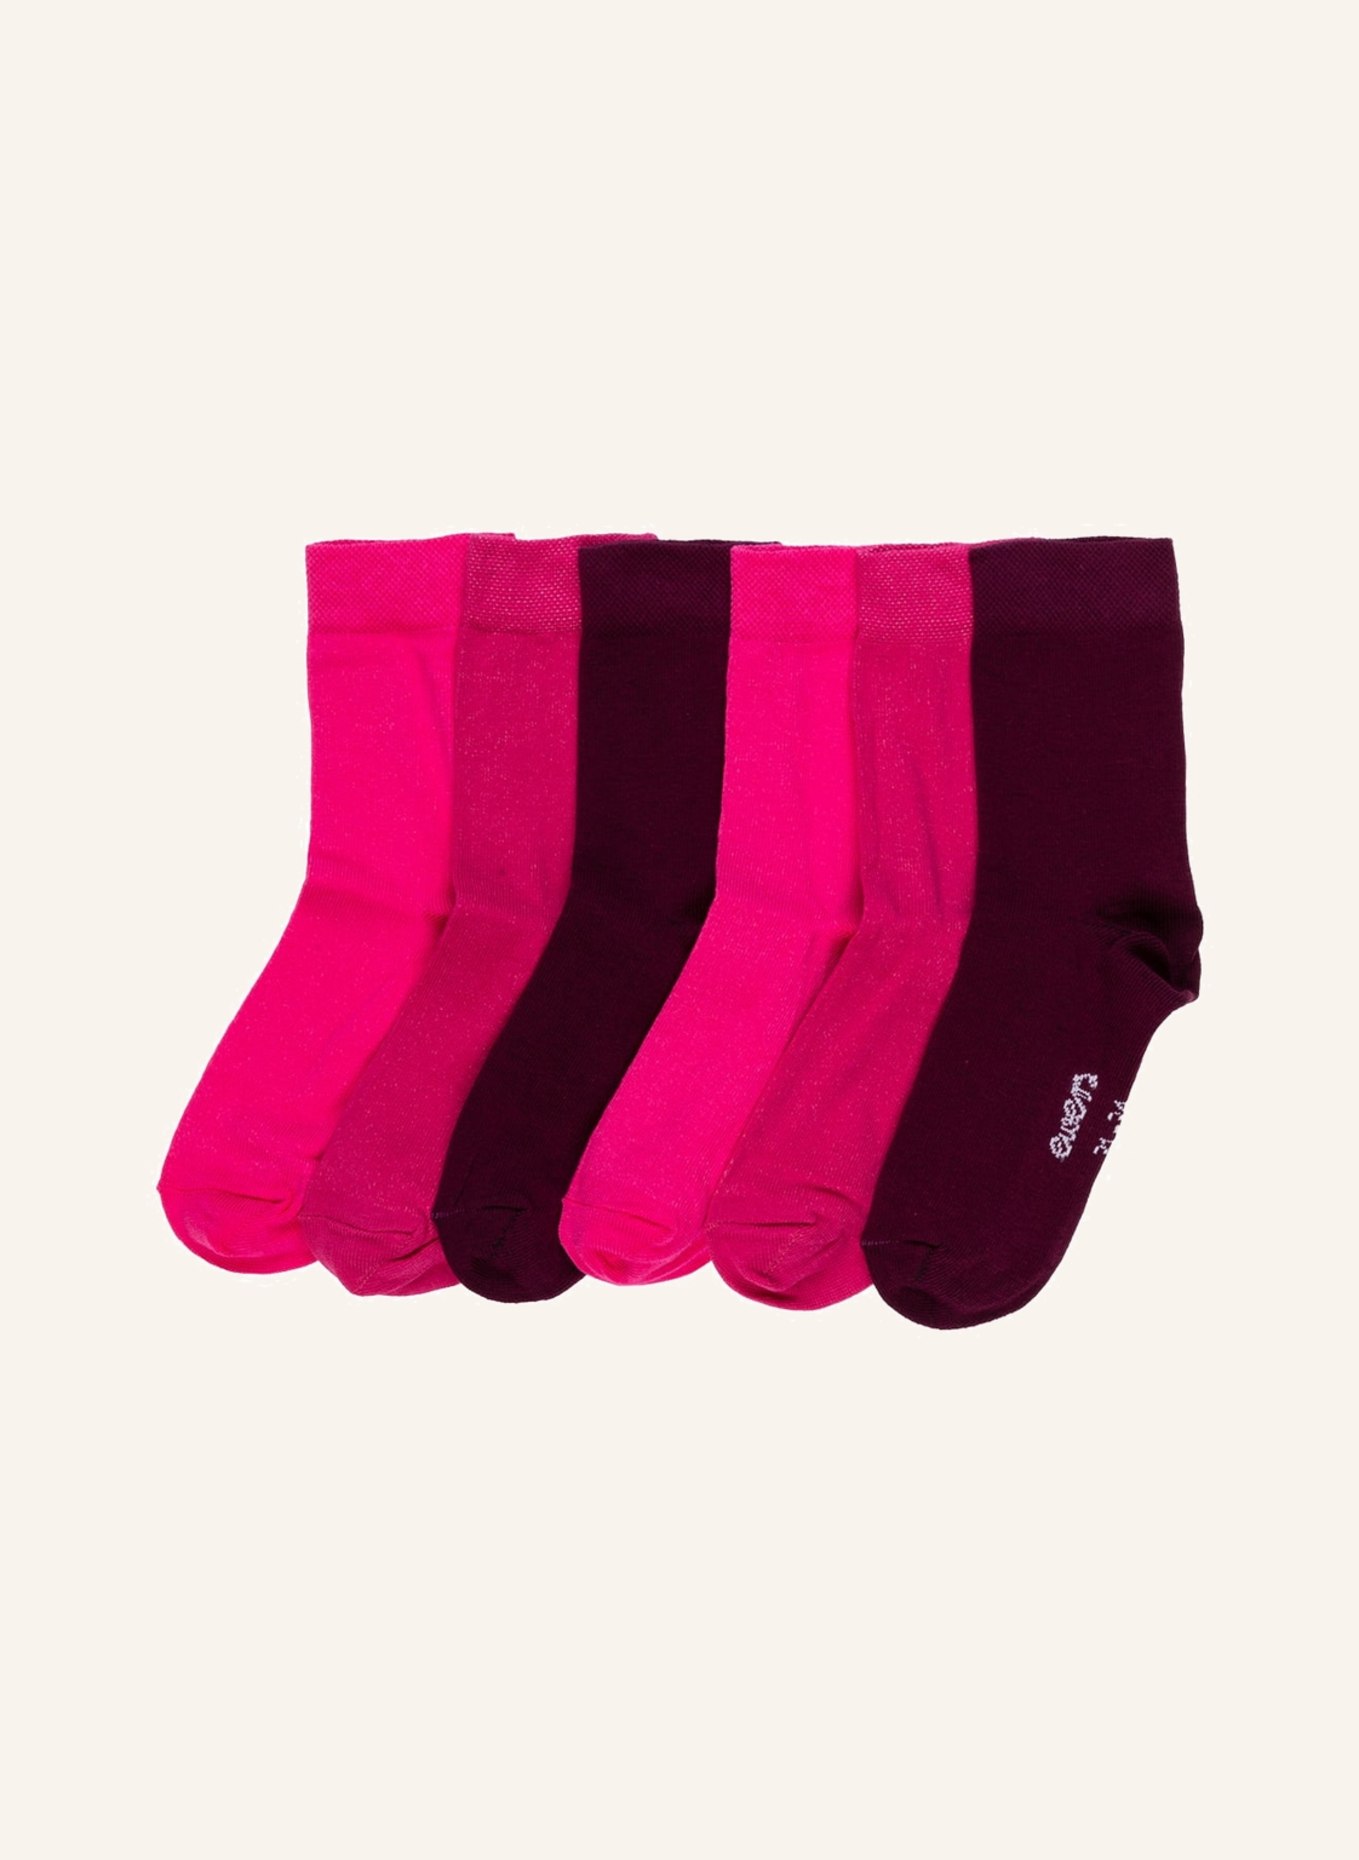 ewers COLLECTION 6er-Pack Socken, Farbe: 20 20 pink - lila (Bild 1)